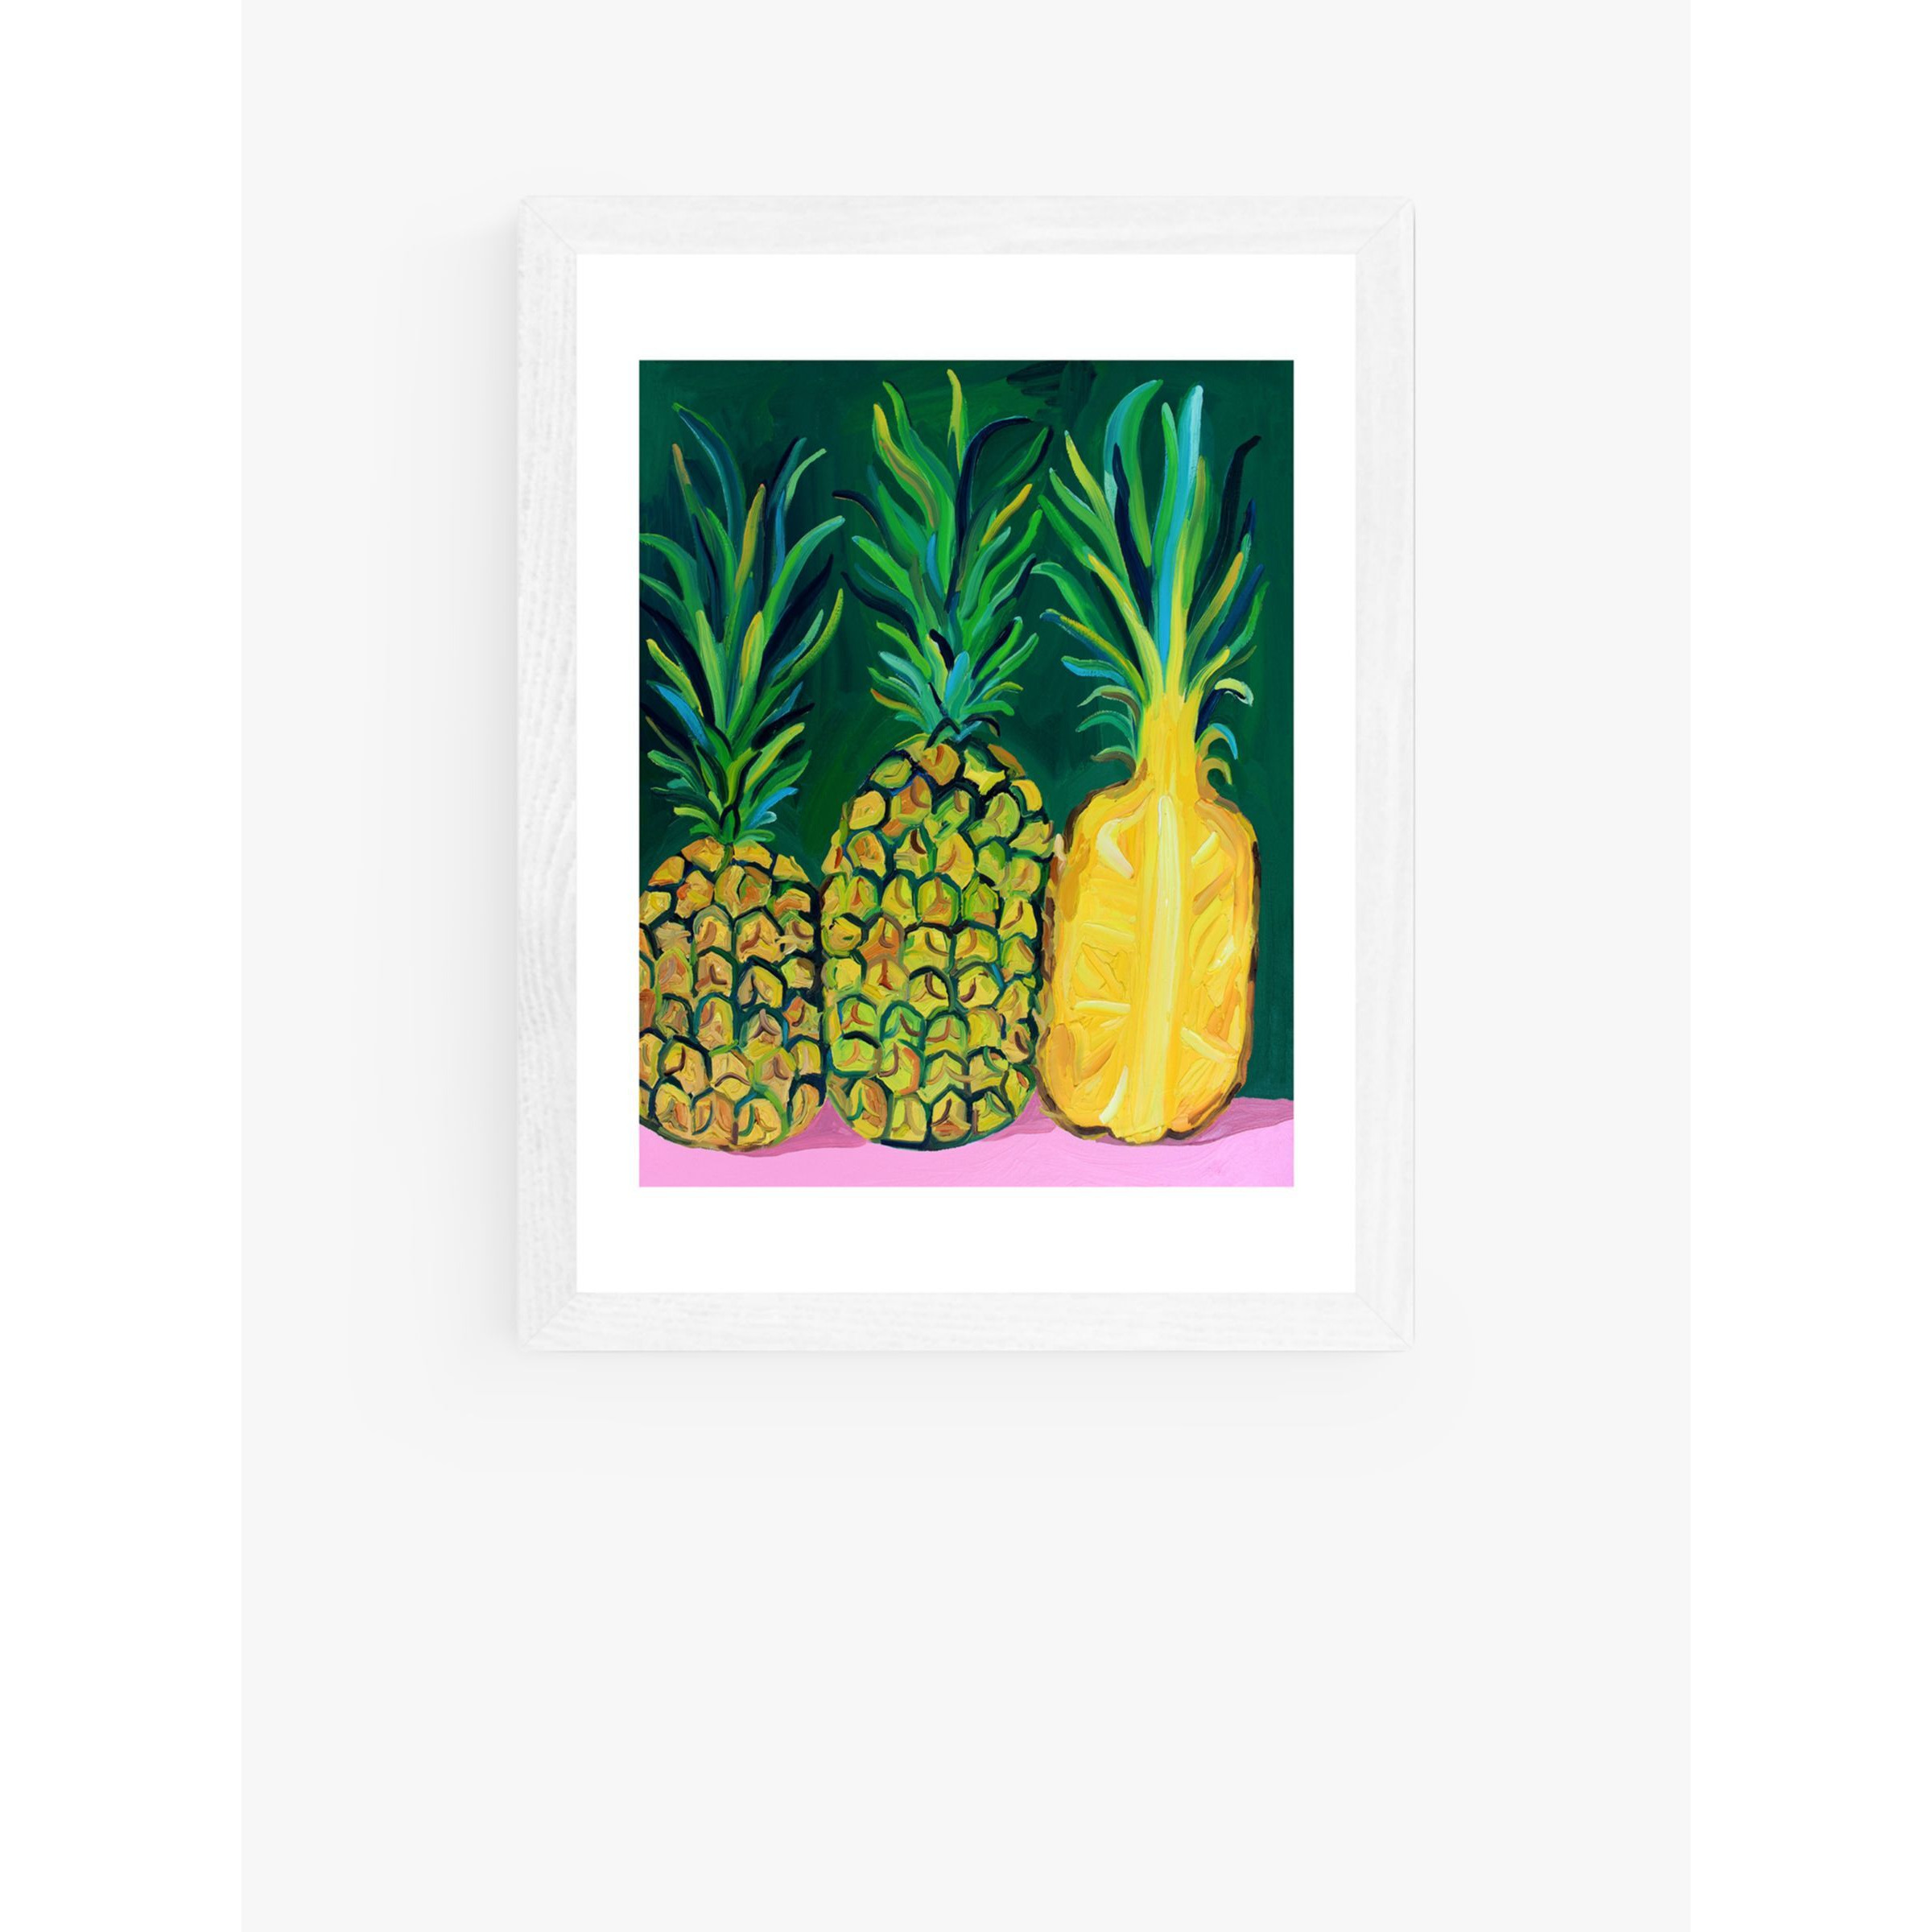 EAST END PRINTS Alice Straker 'Pineapples' Framed Print - image 1